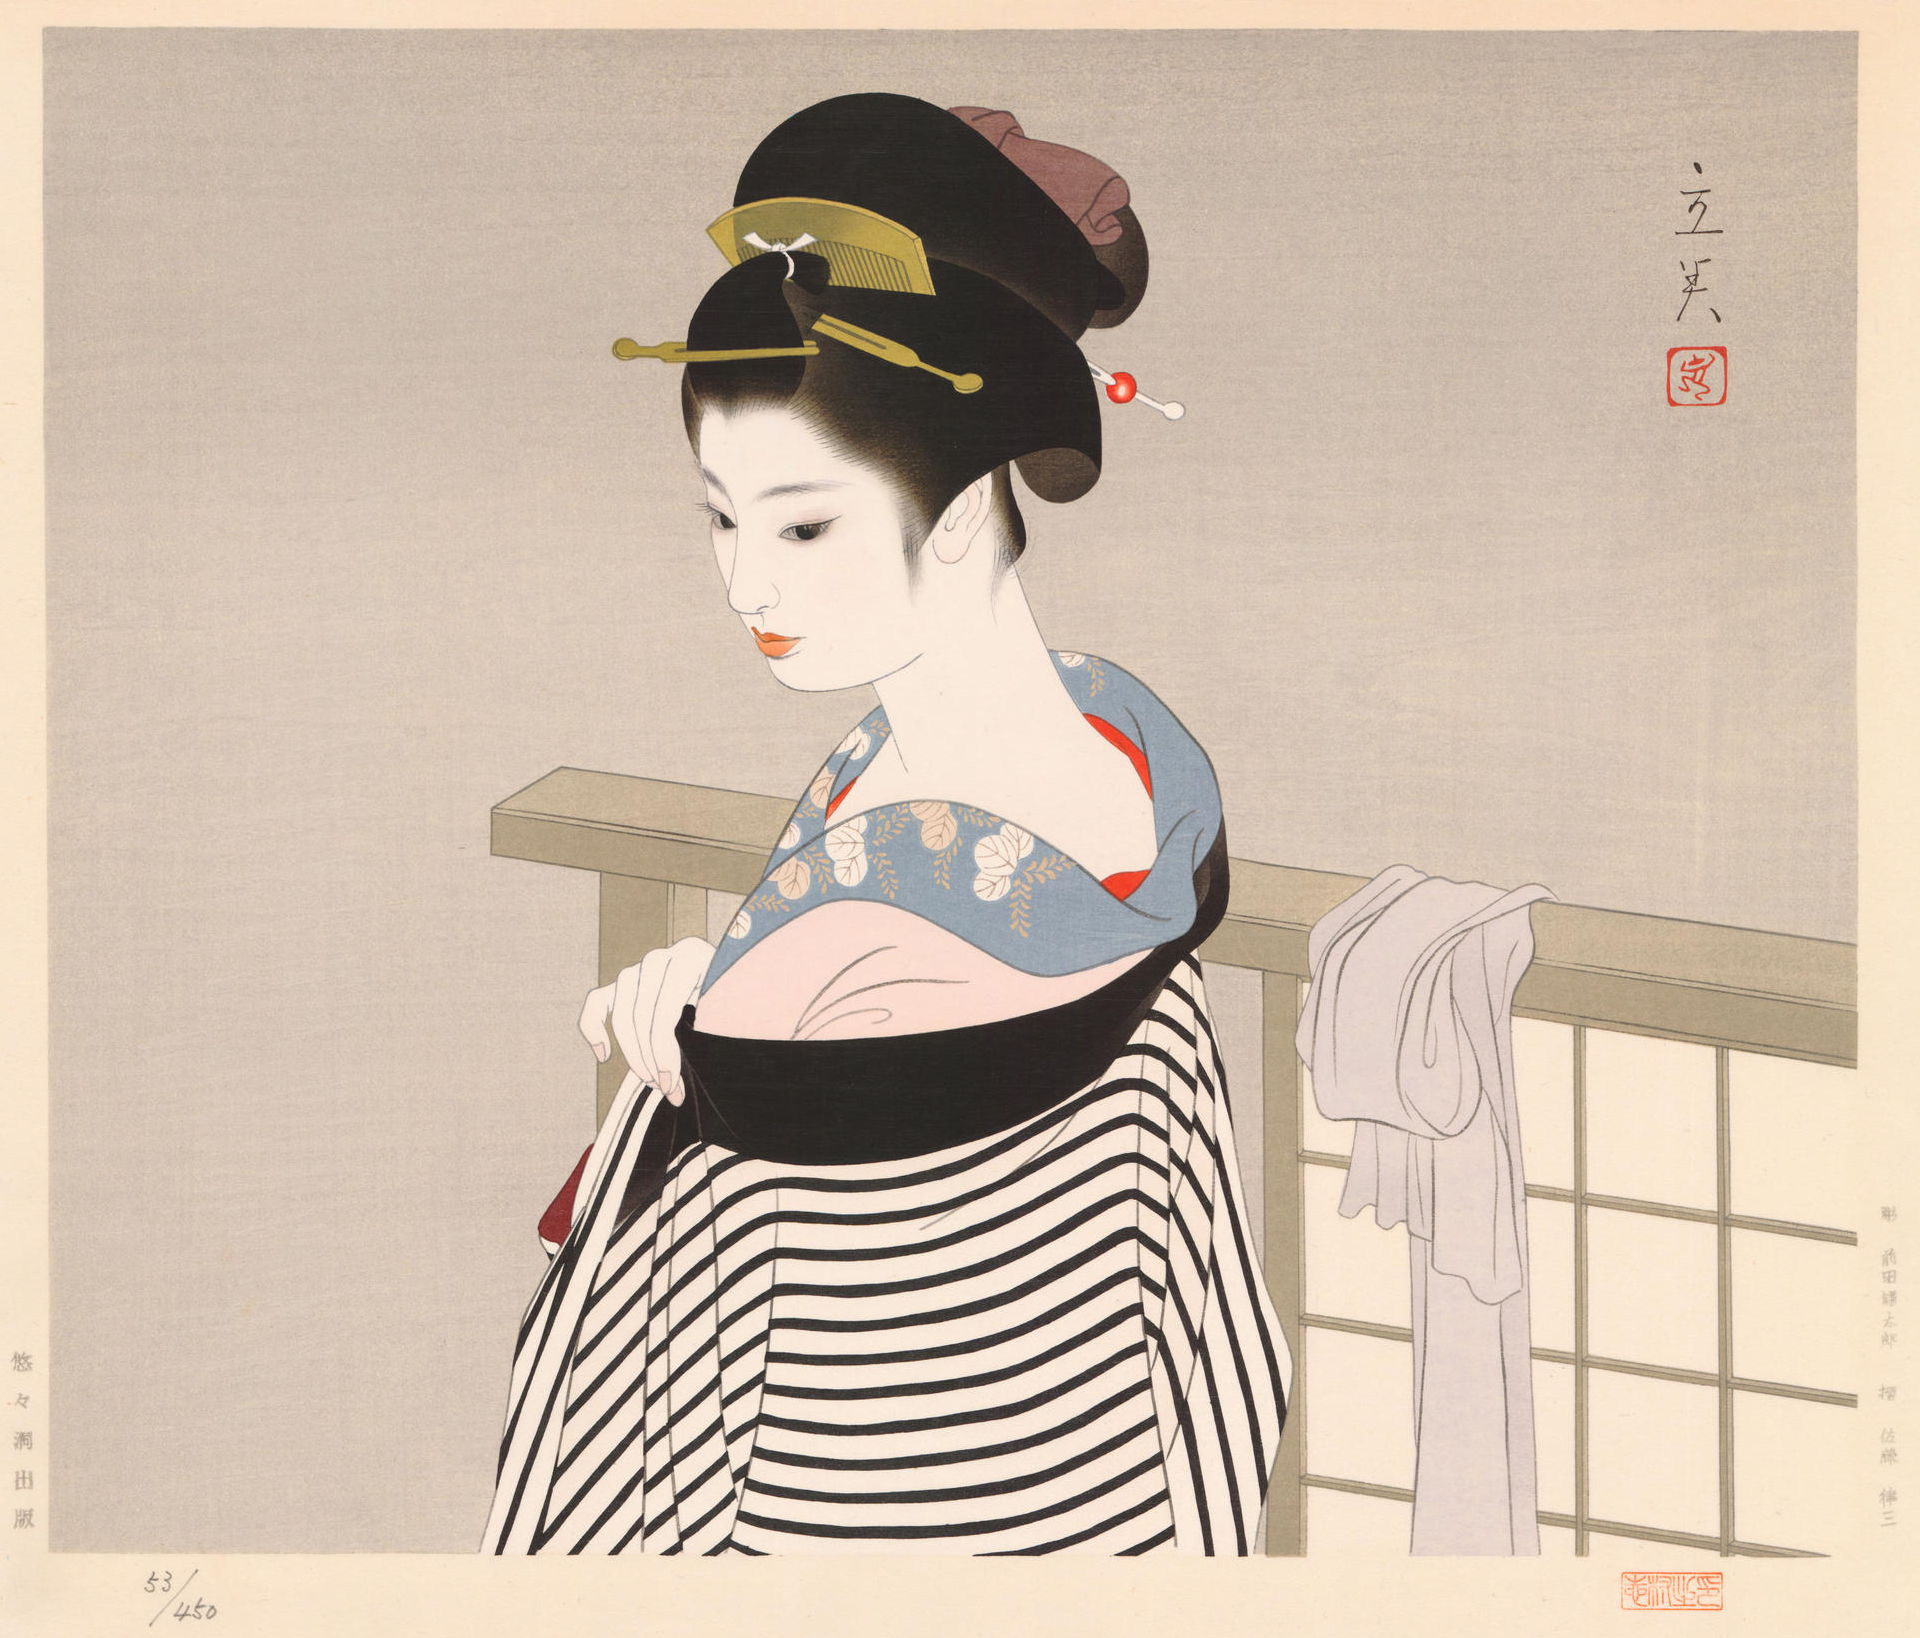 Shimura Tatsumi Catalogue - Shitaku (Preparation) woodblock print